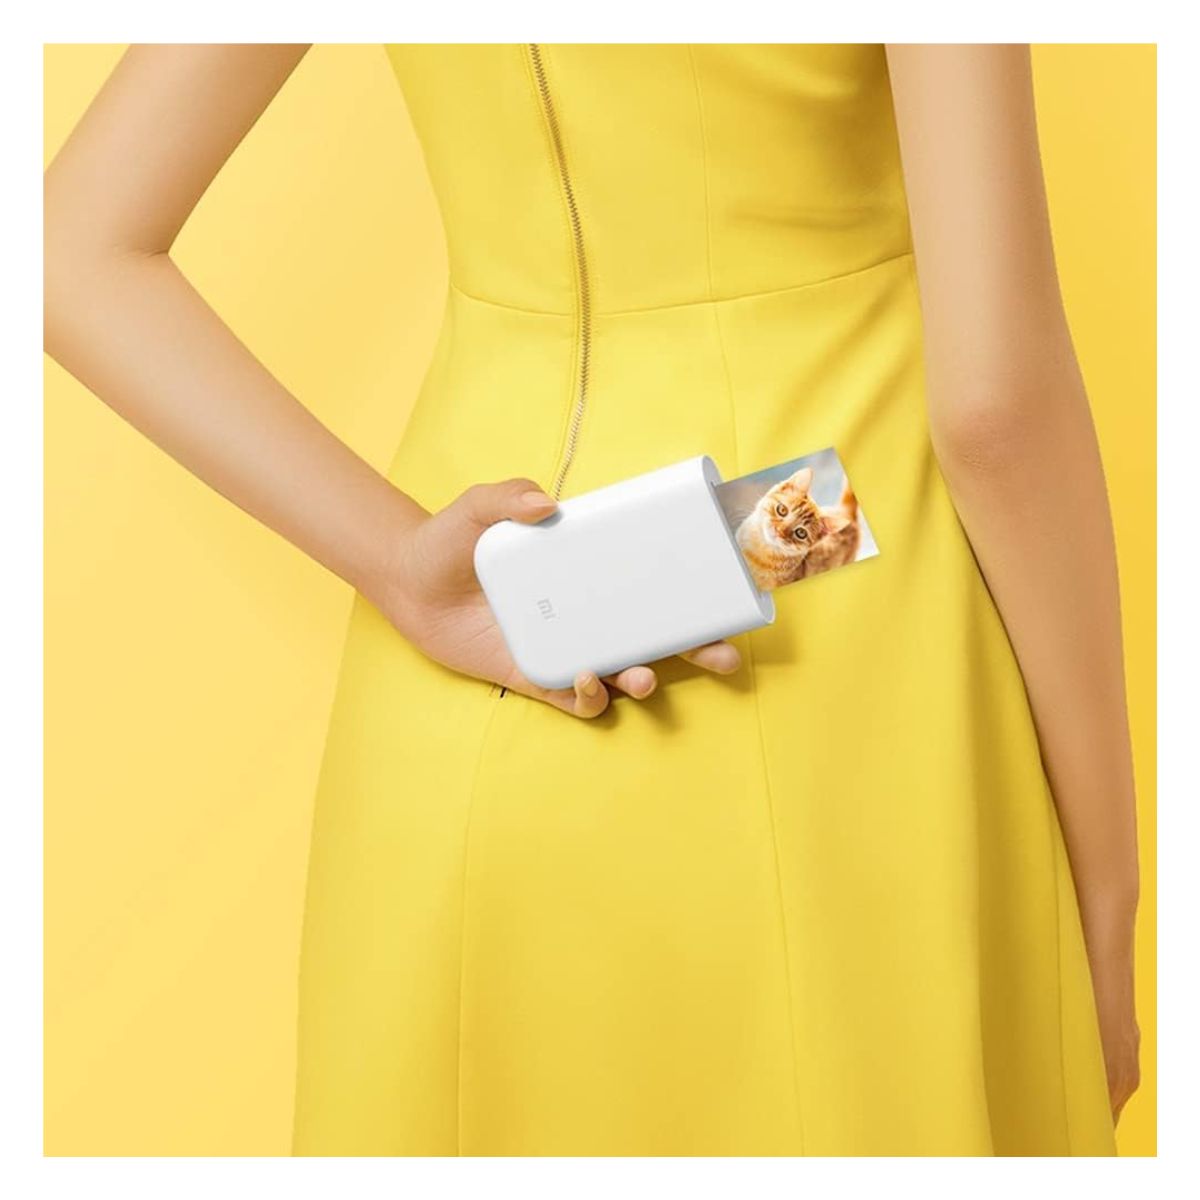 Xiaomi Papel Fotográfico x20 Impresora Fotográfica Mi Pocket - Smart Concept